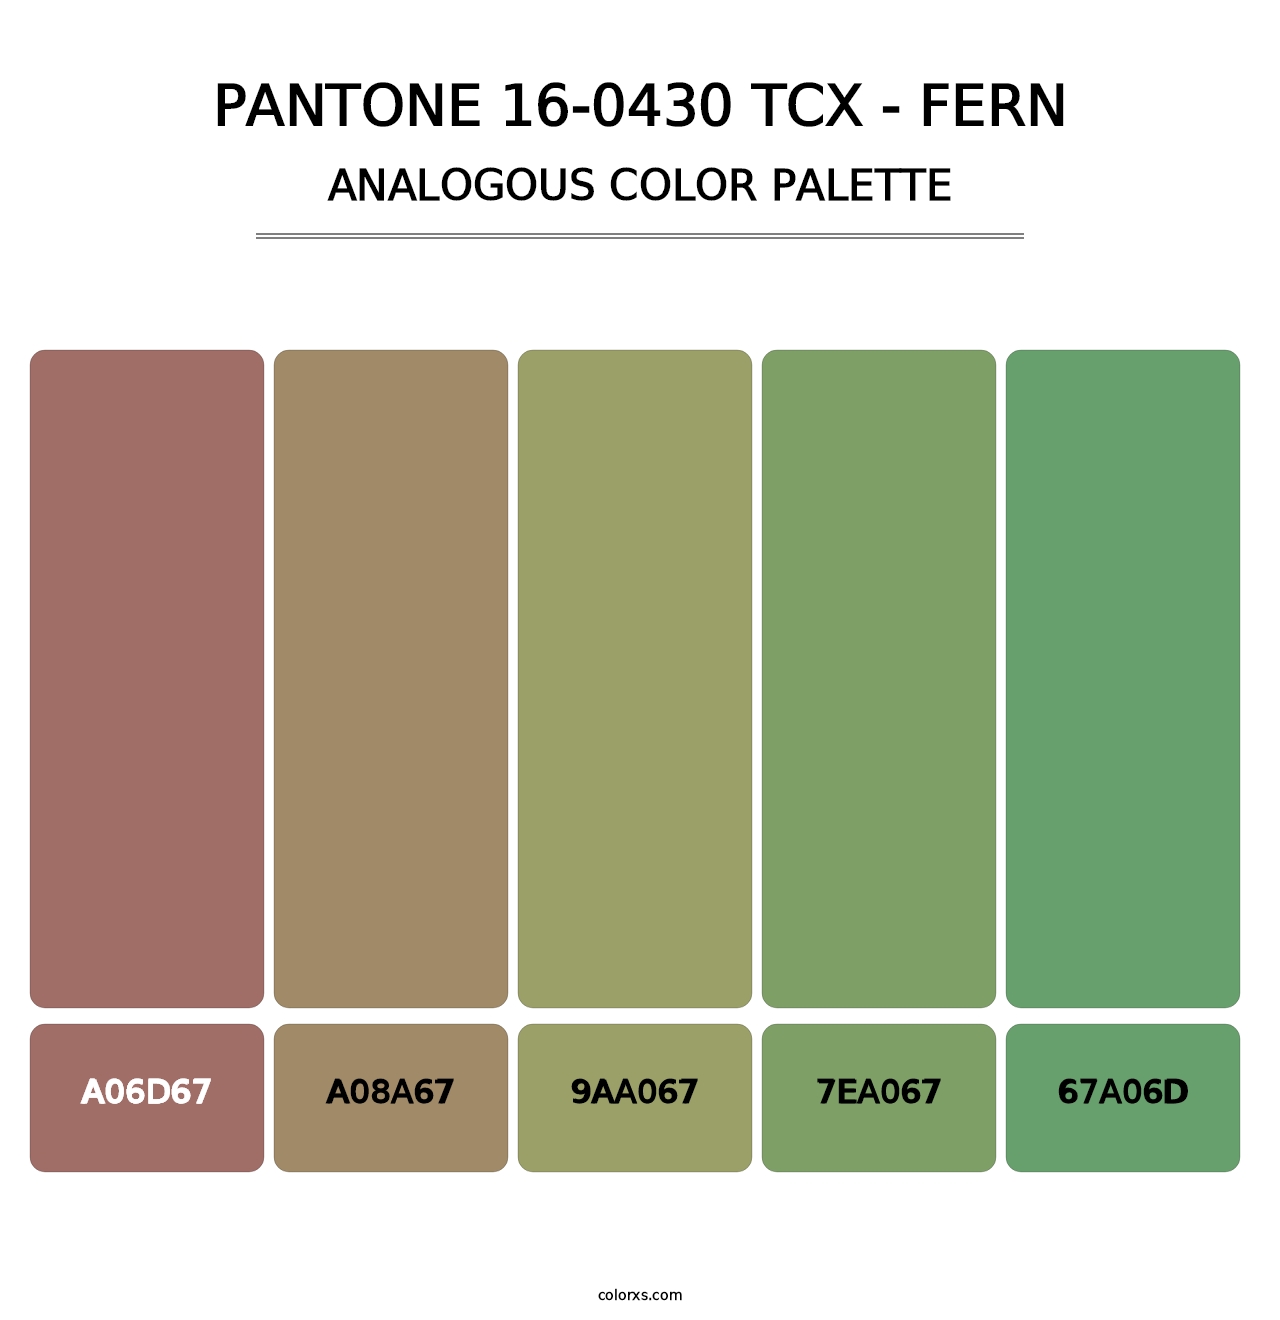 PANTONE 16-0430 TCX - Fern - Analogous Color Palette